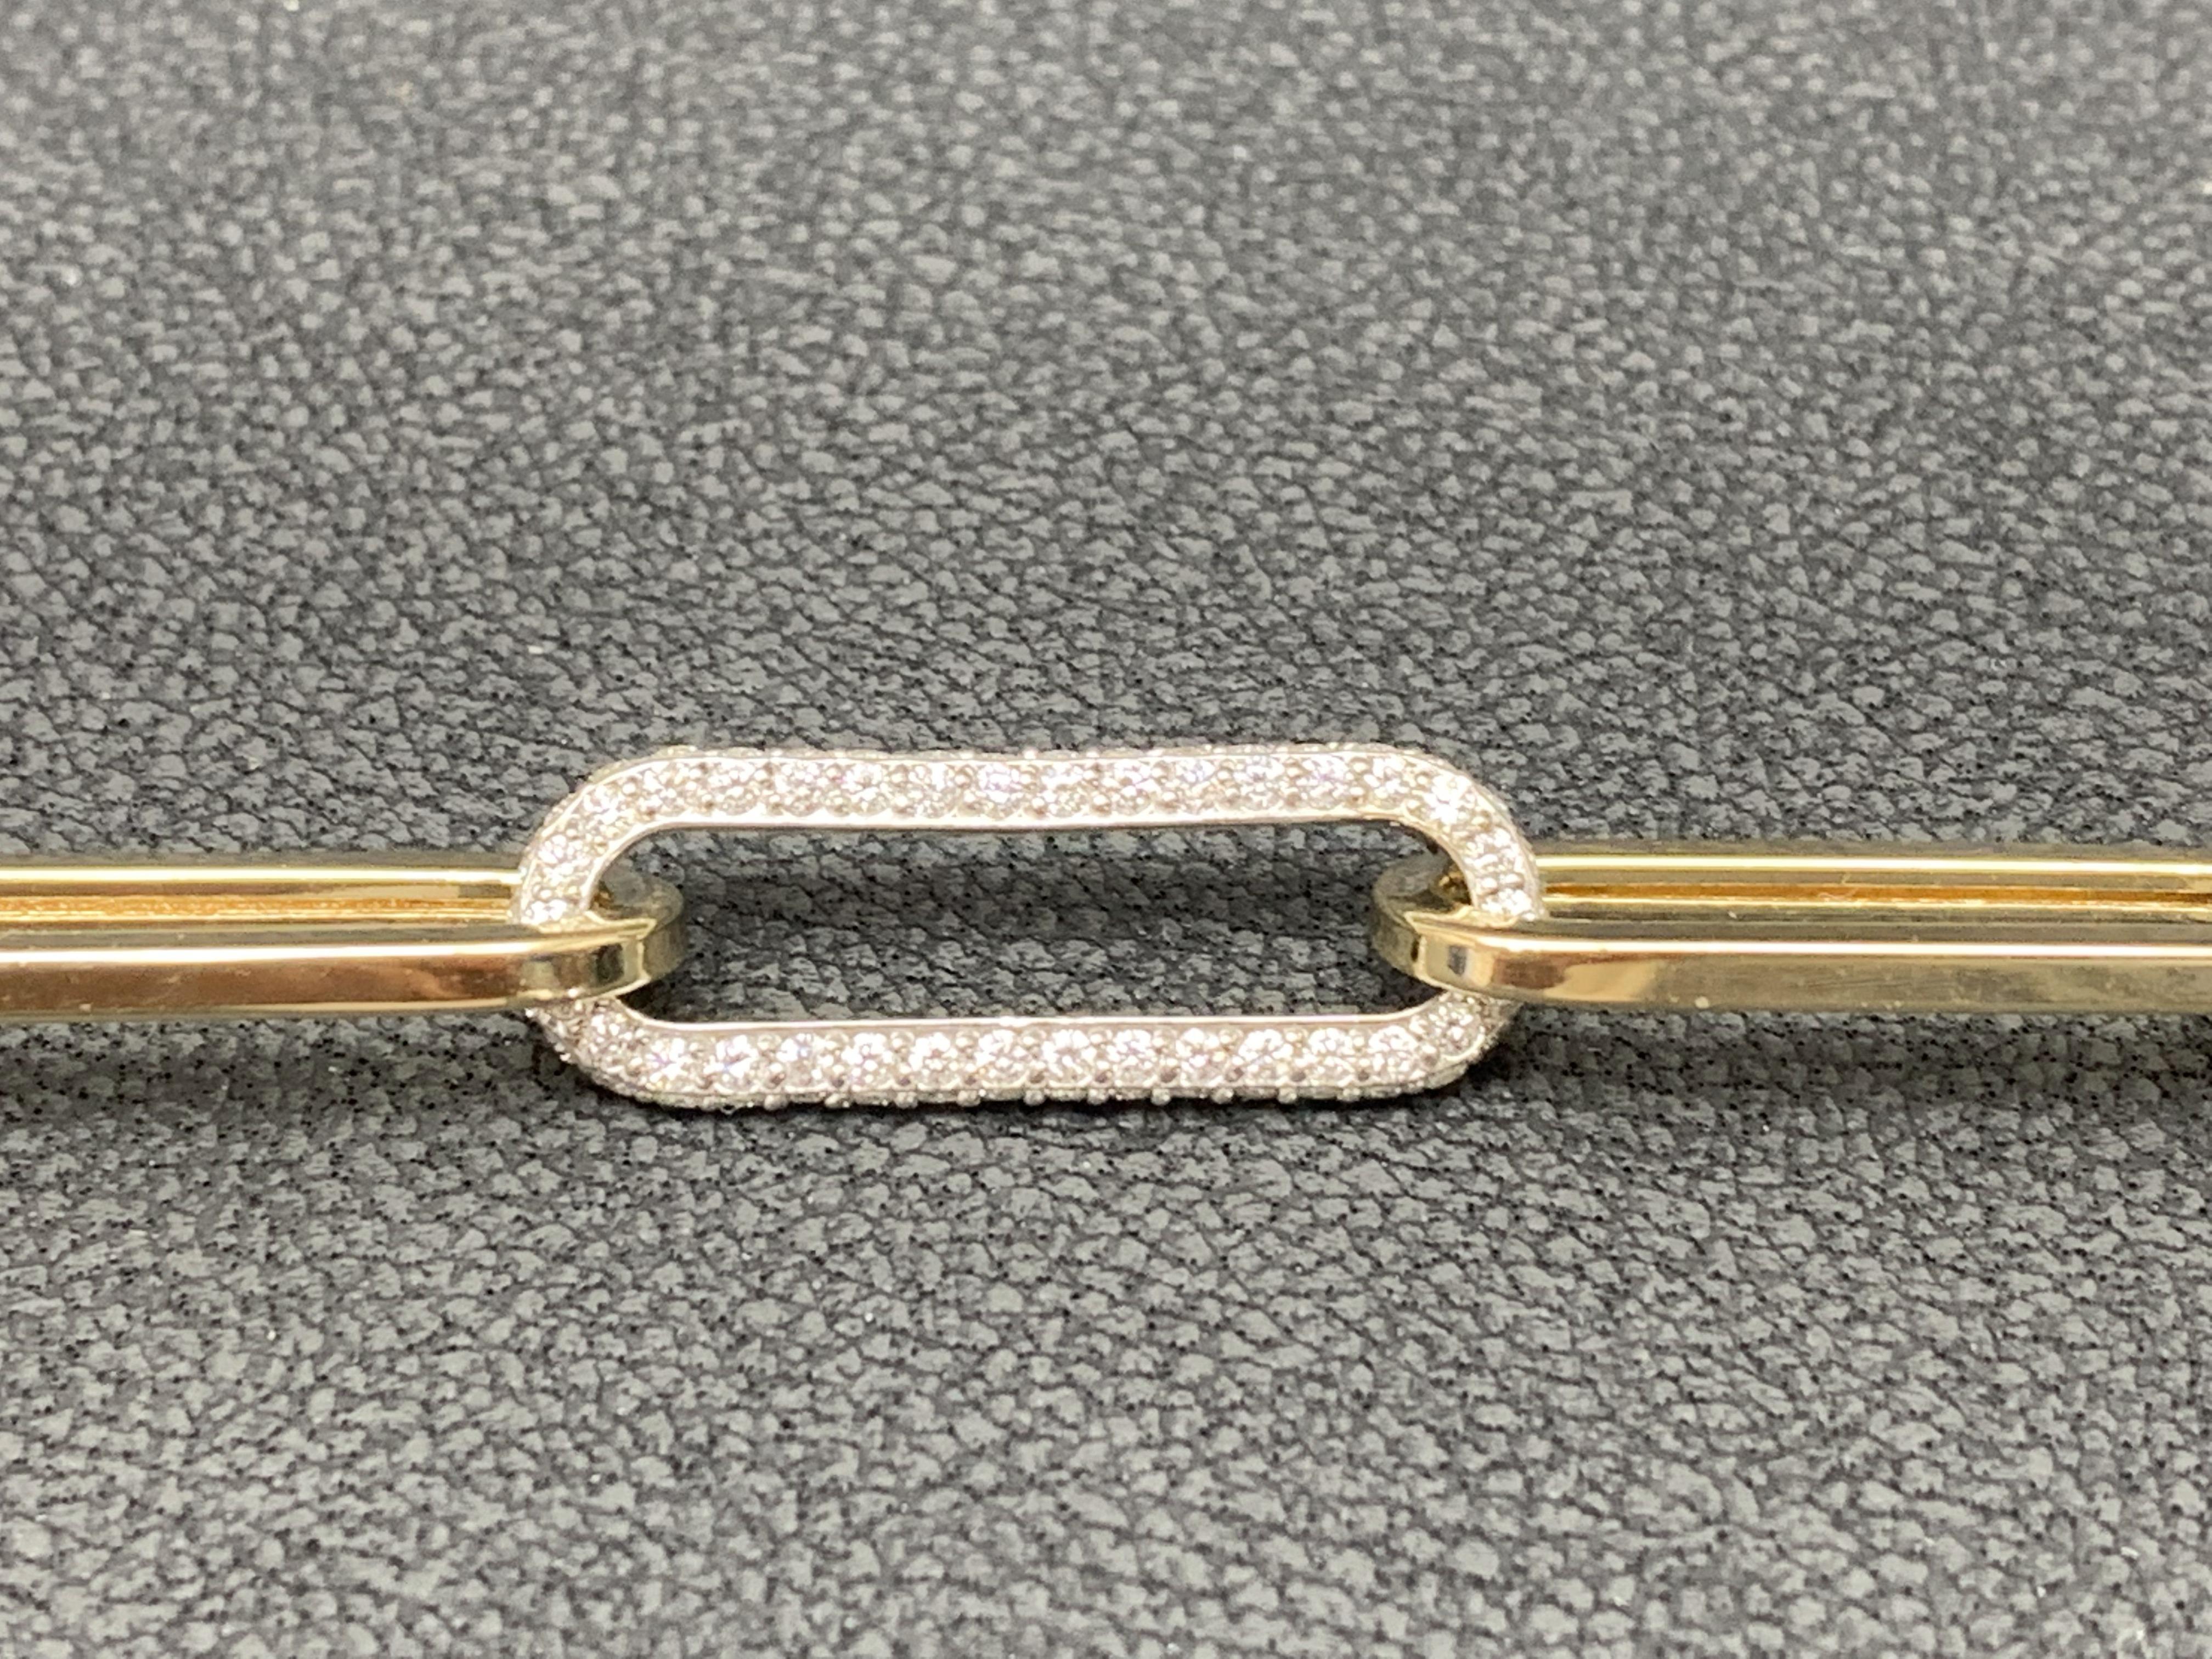 gold paper clip bracelet with diamonds